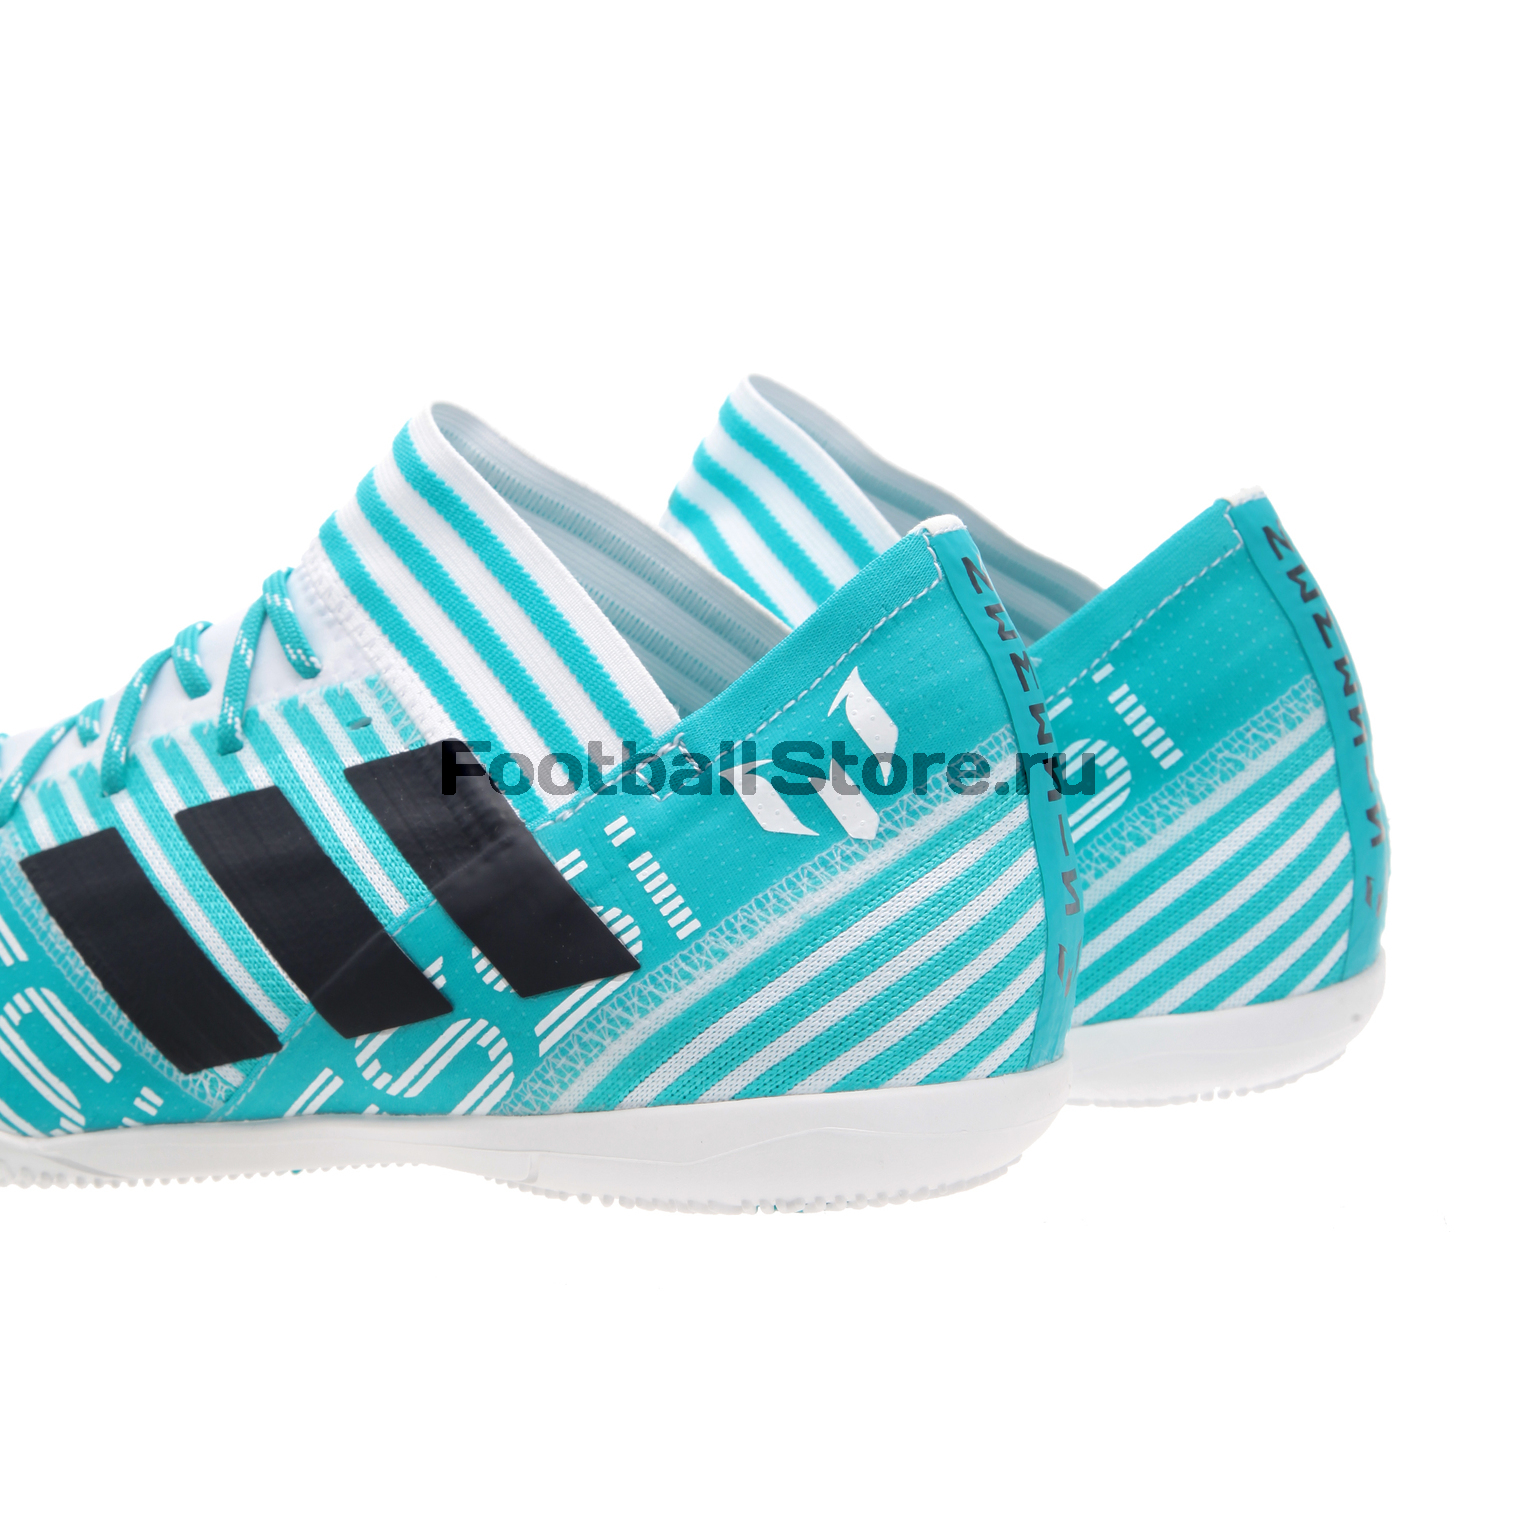 Обувь для зала Adidas Nemeziz Messi Tango 17.3 IN BY2416